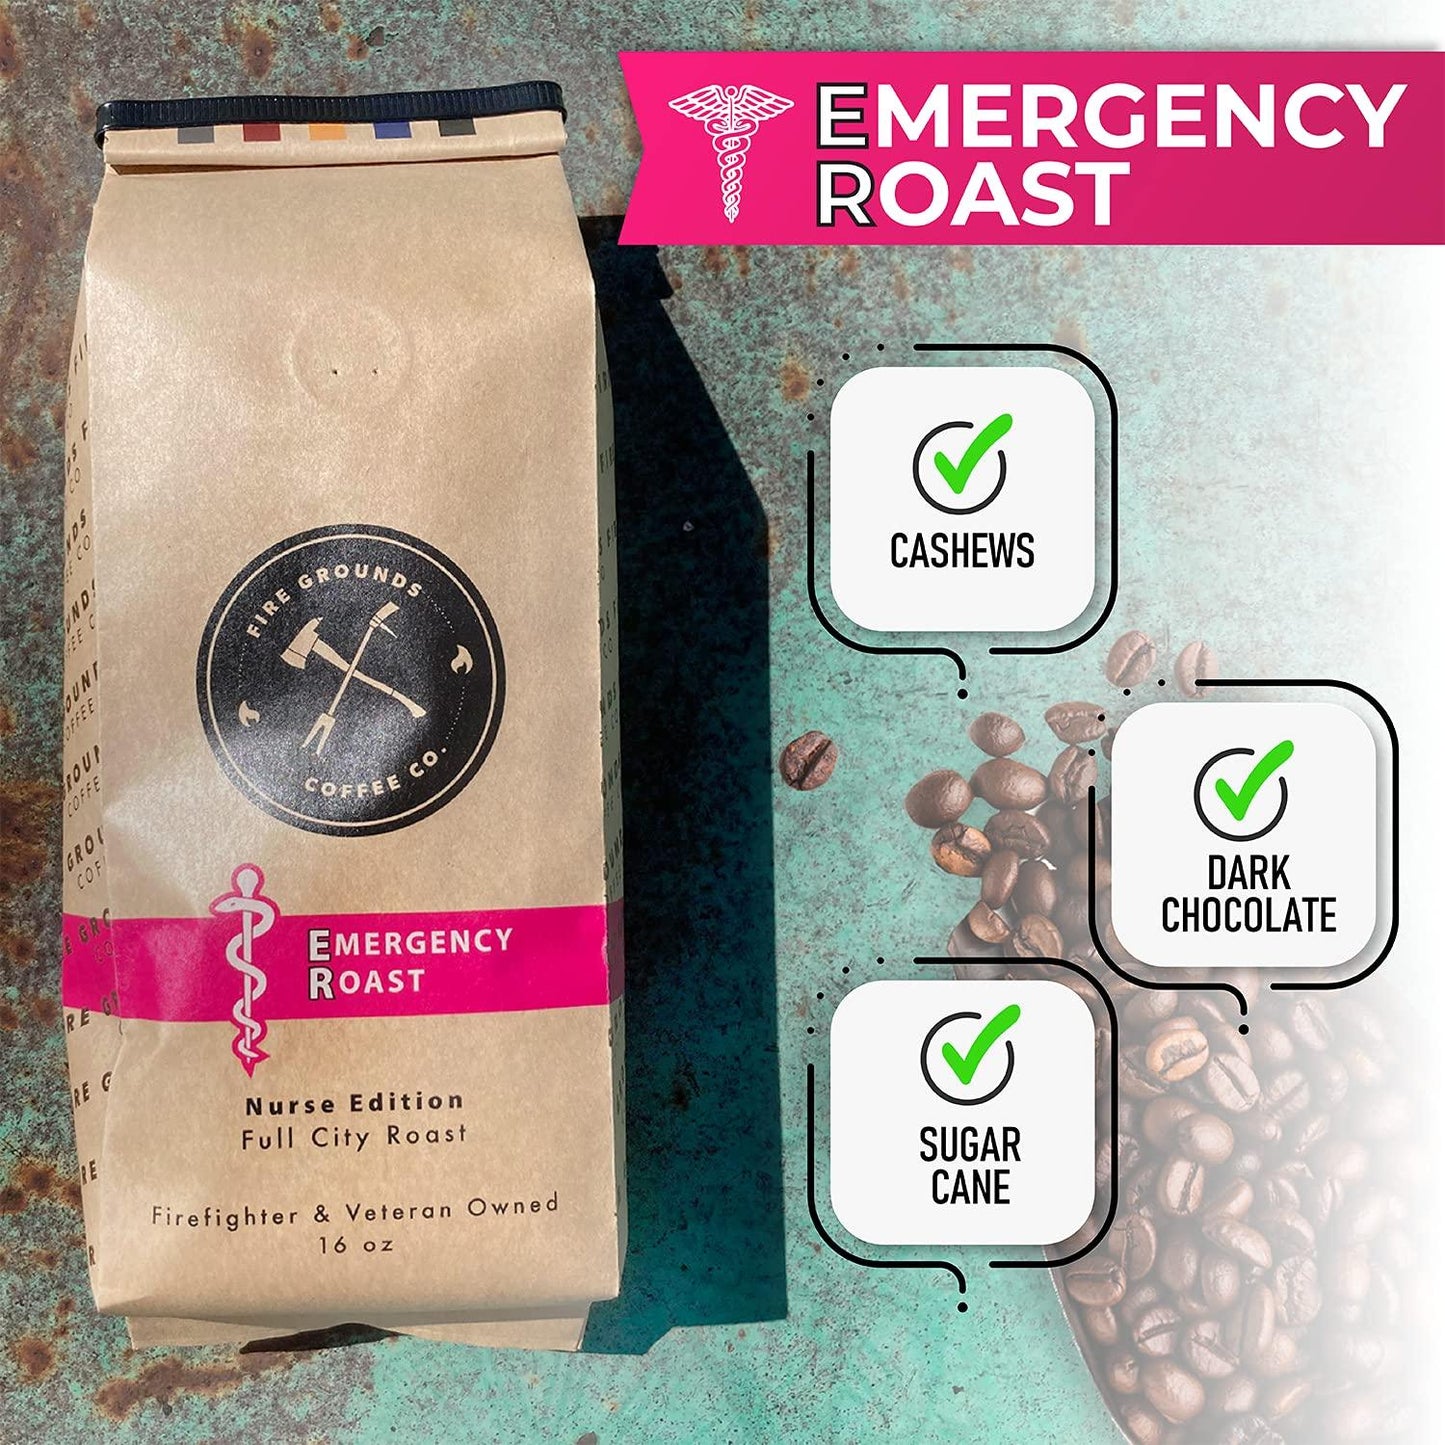 EMERGENCY ROAST (FULL CITY ROAST) by Fire Grounds Coffee Company - The Hammer Sports